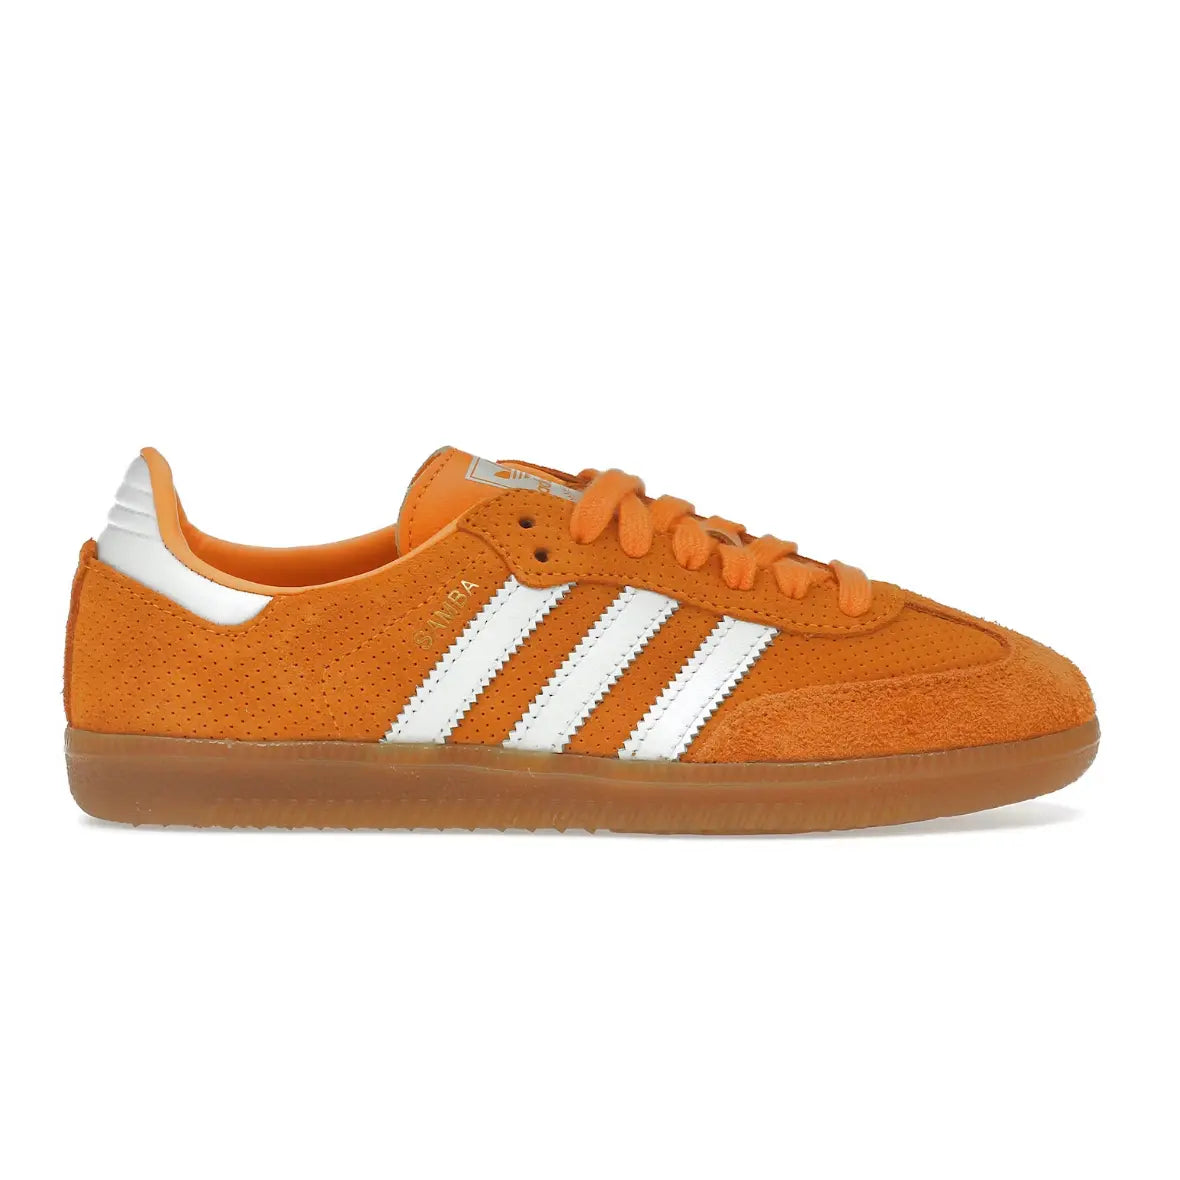 Adidas Samba OG Orange Rush Gum  SA Sneakers